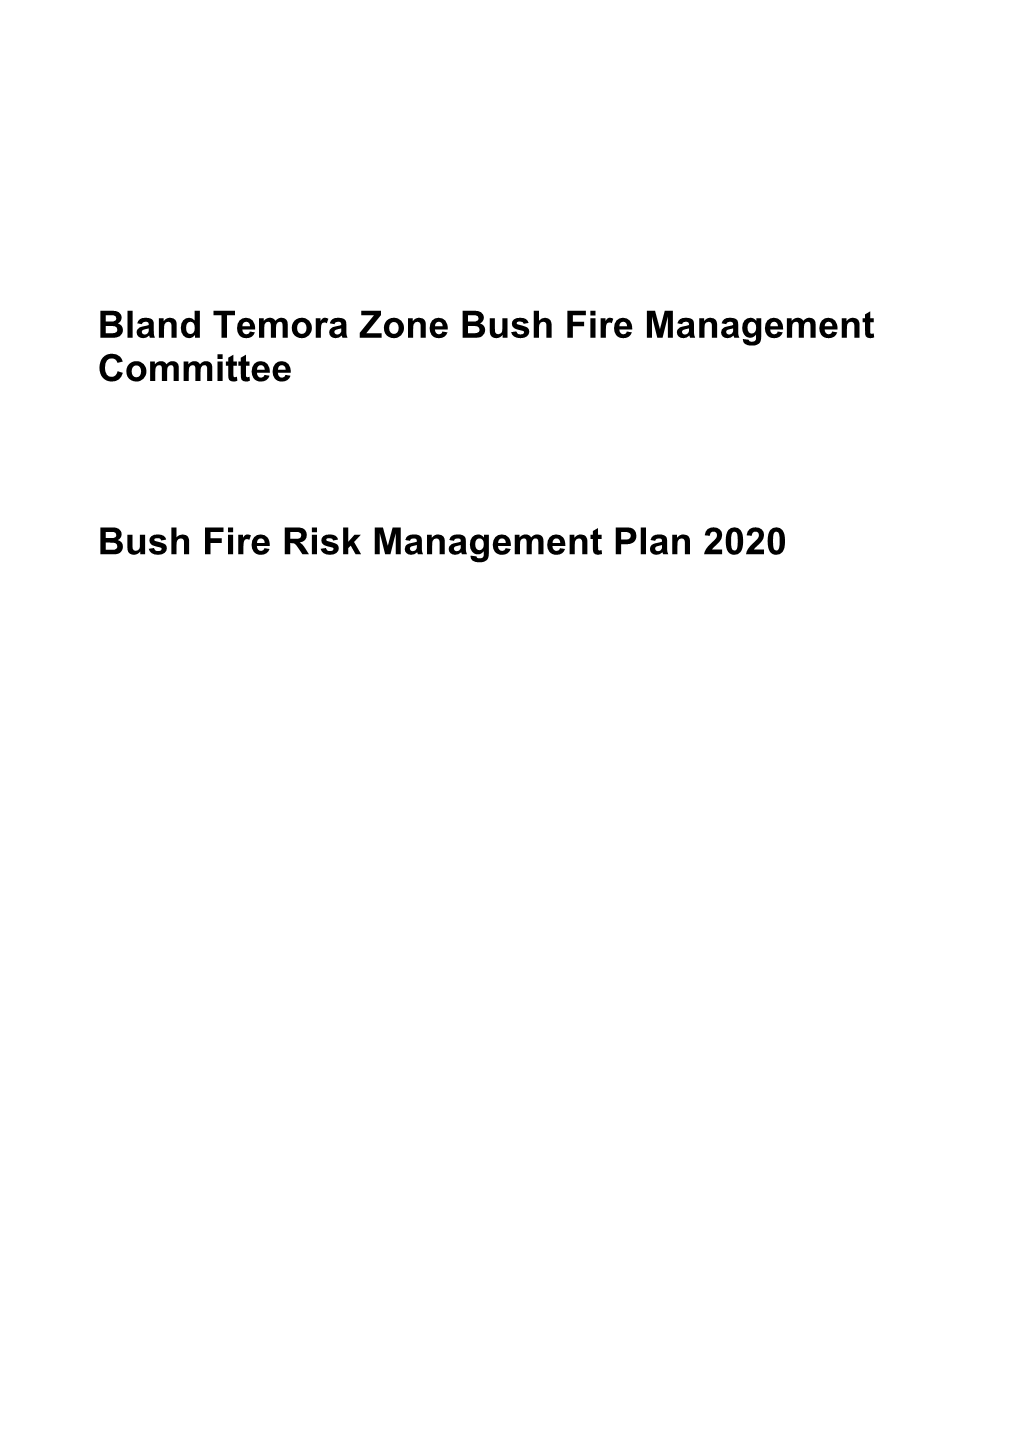 Bland Temora Zone Bush Fire Management Committee Bush Fire Risk Management Plan 2020